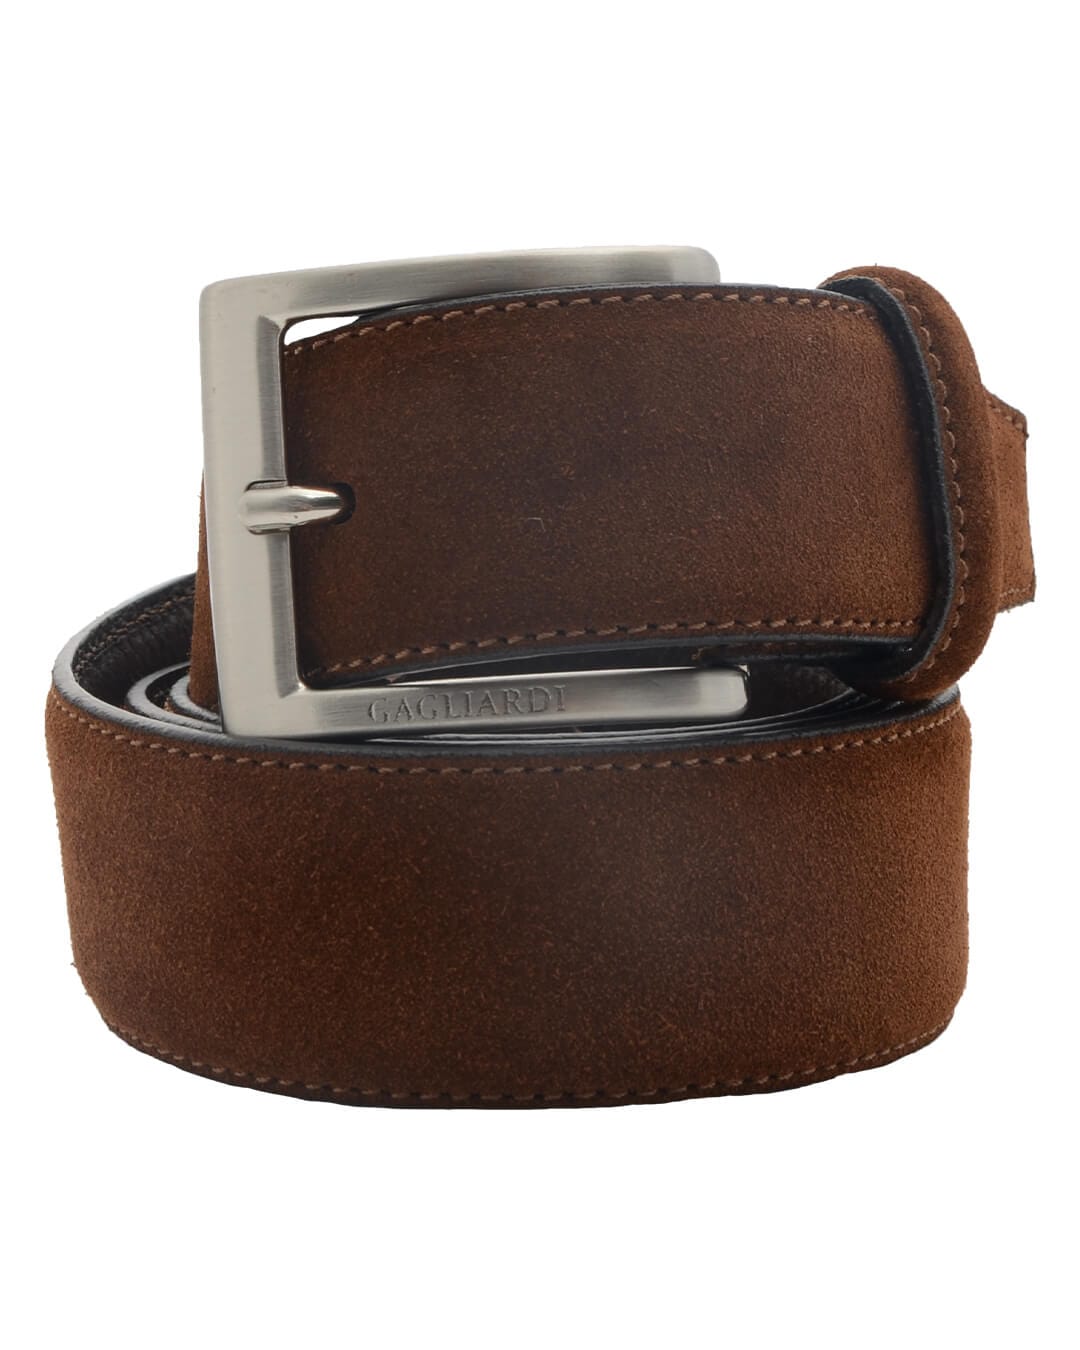 Gagliardi Belts Gagliardi Tan Suede Leather Belt With Branding On Buckle